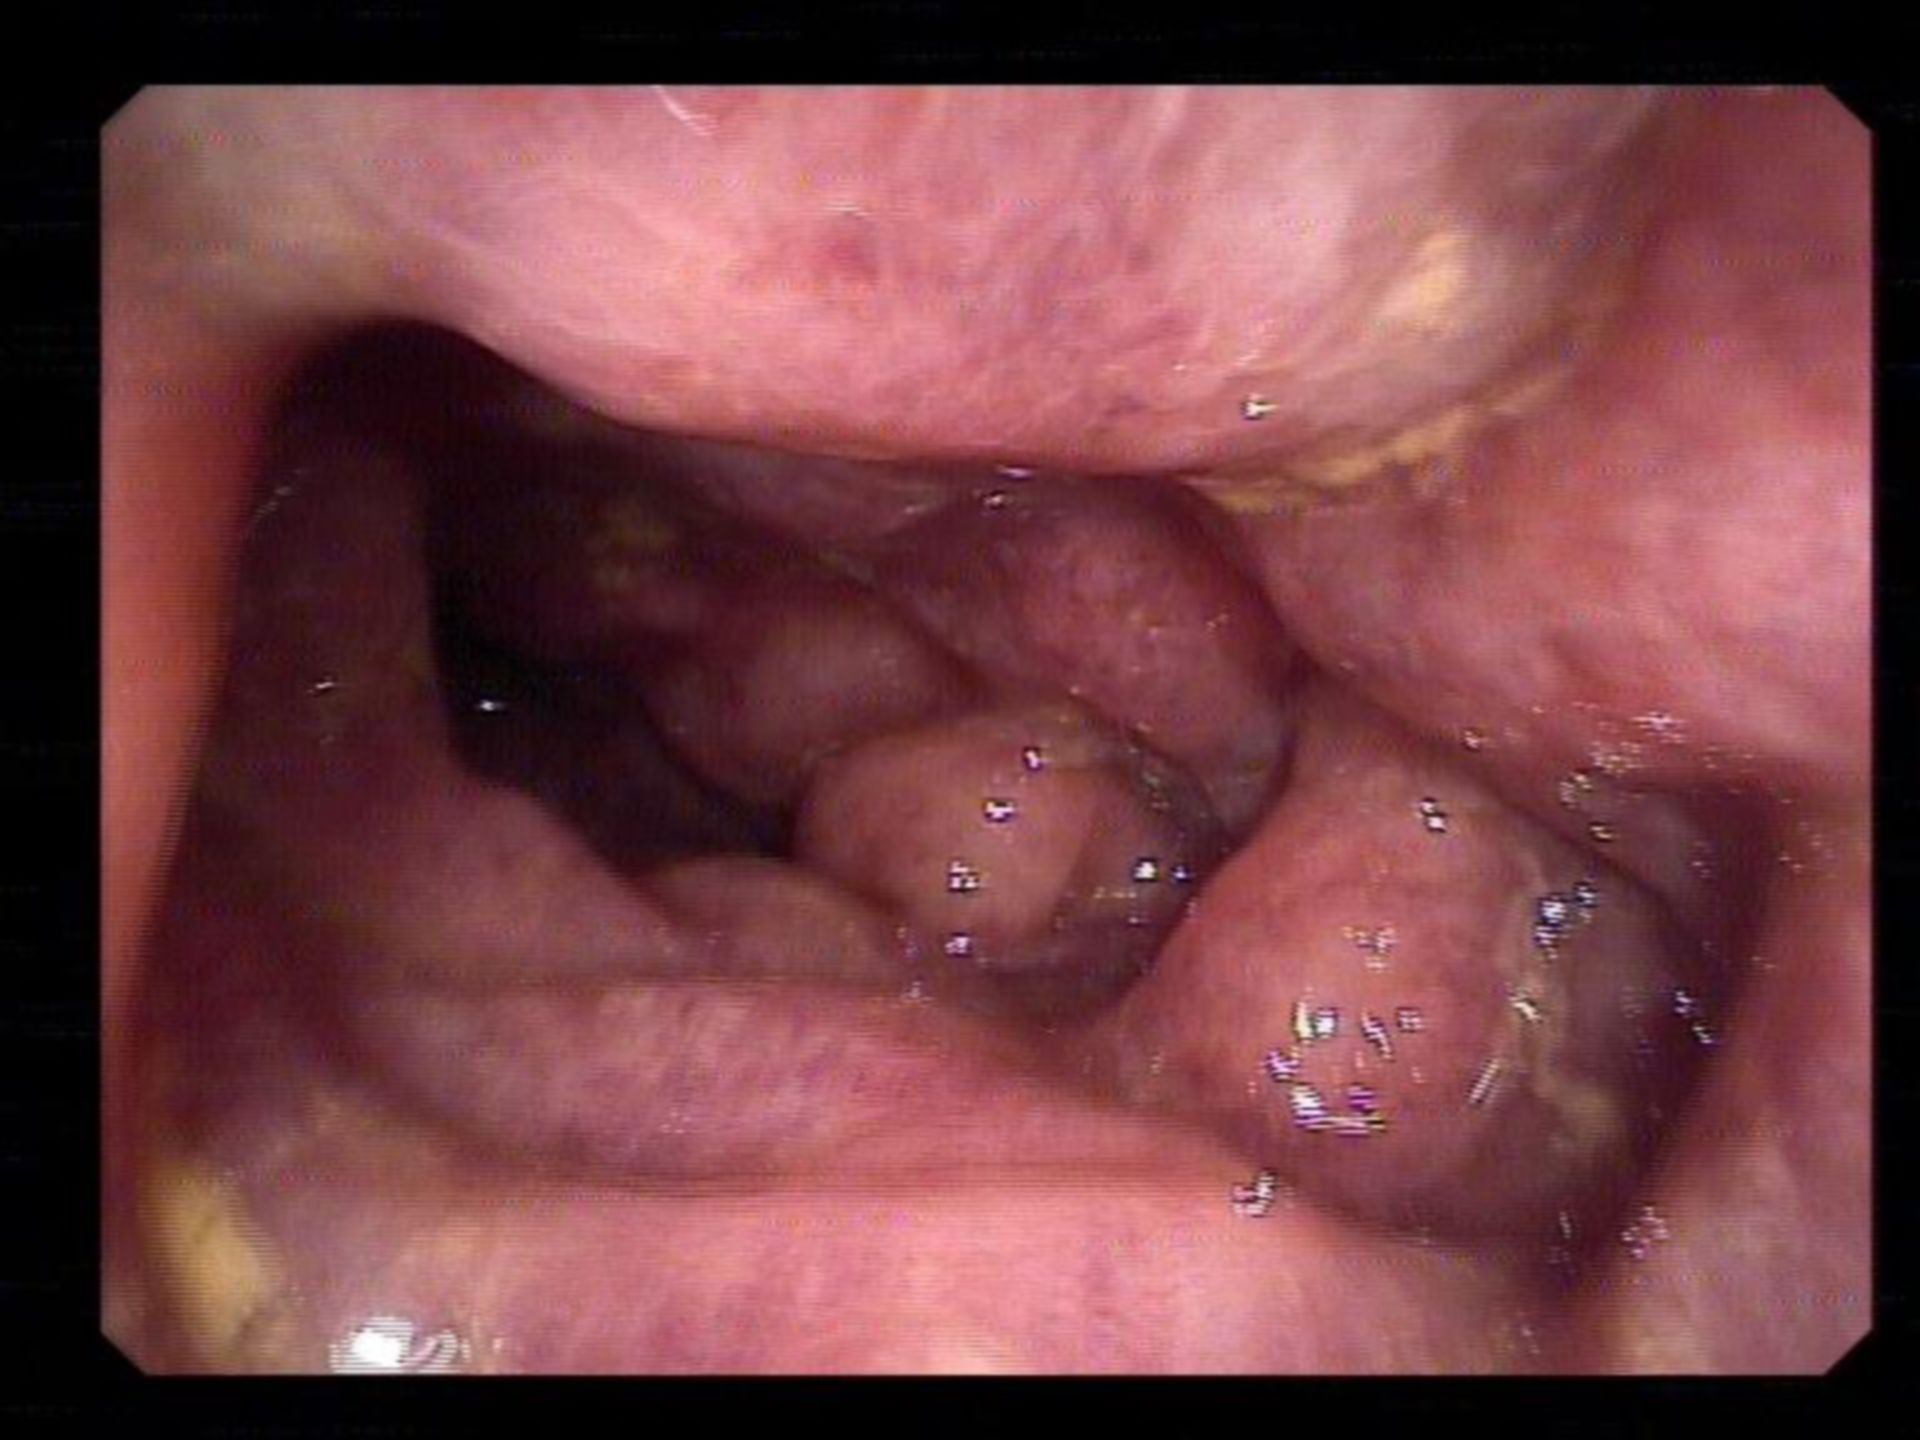 Colitis in EHEC infection